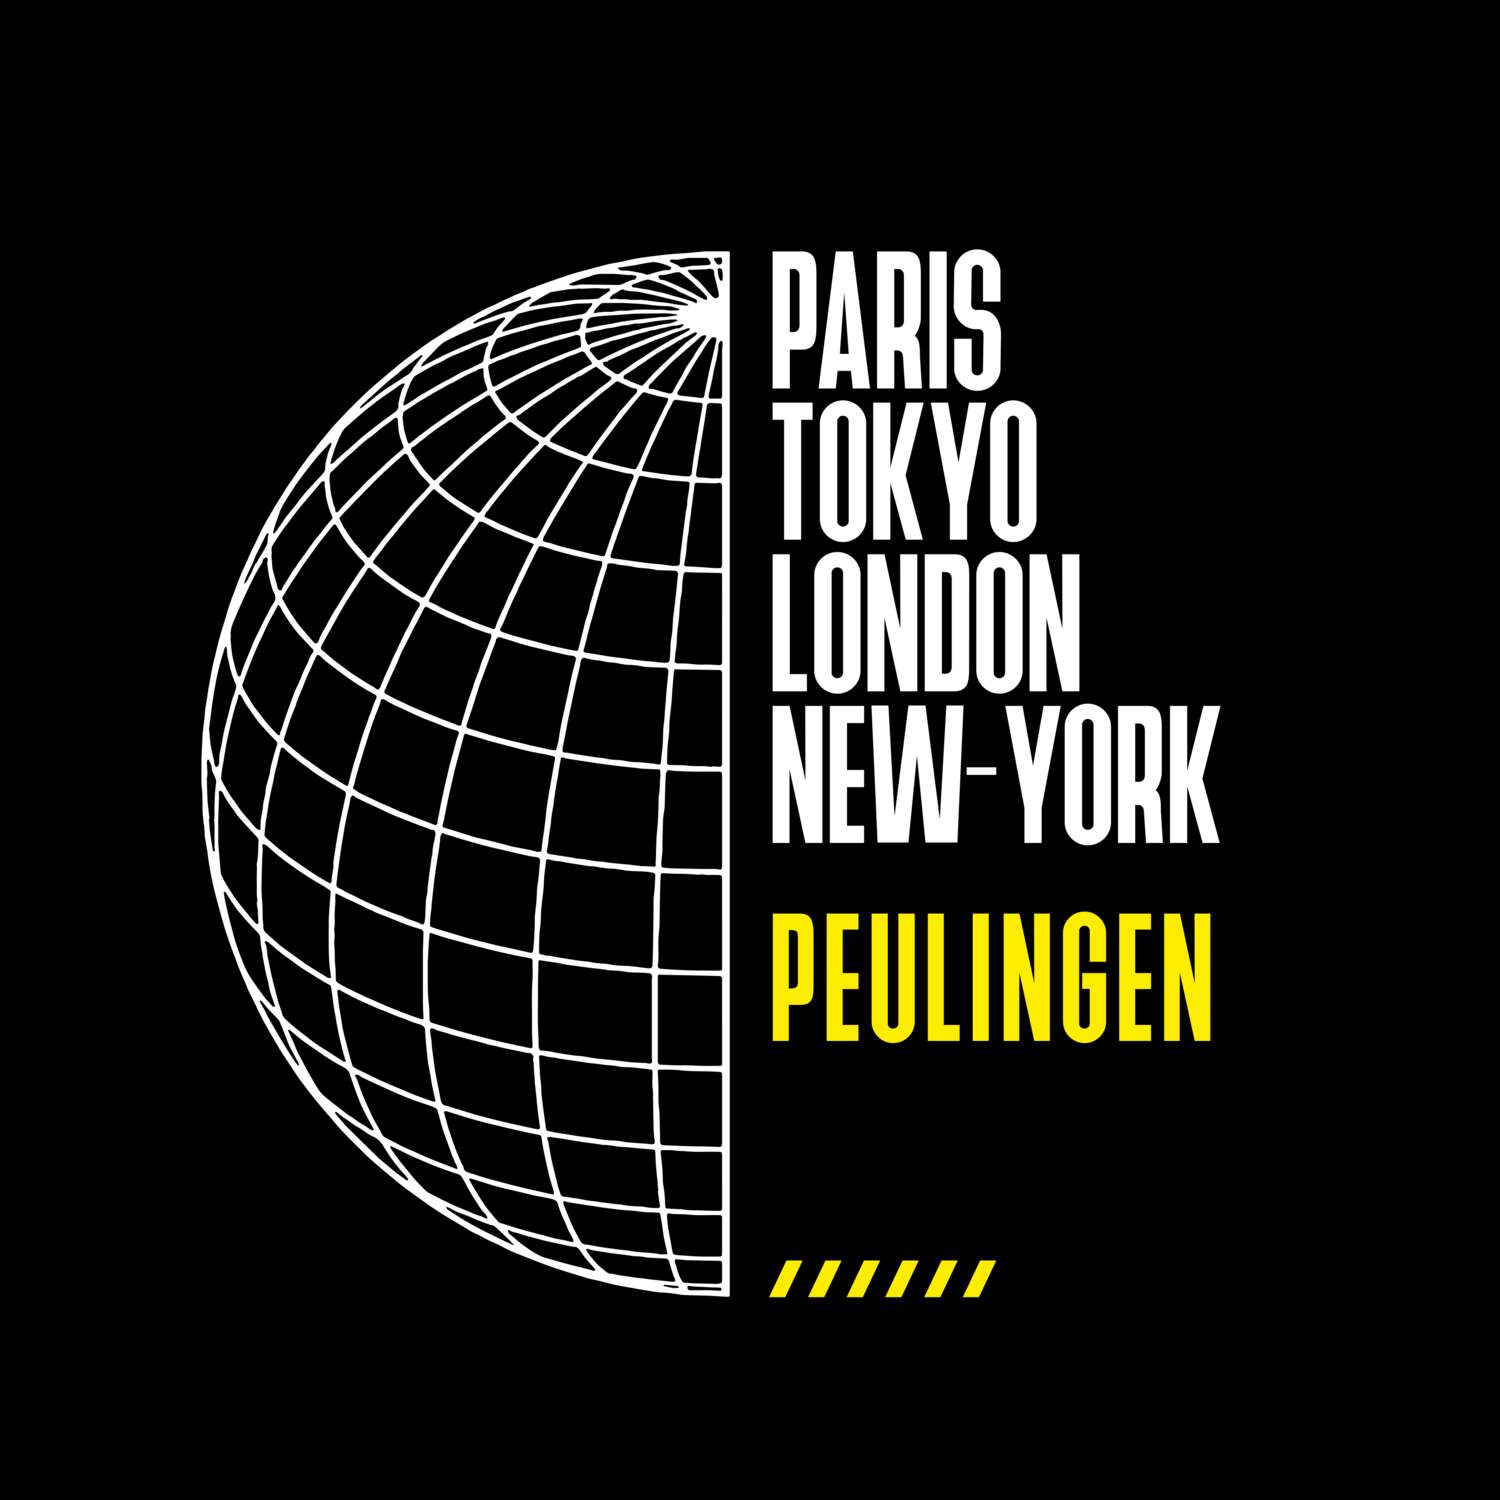 Peulingen T-Shirt »Paris Tokyo London«